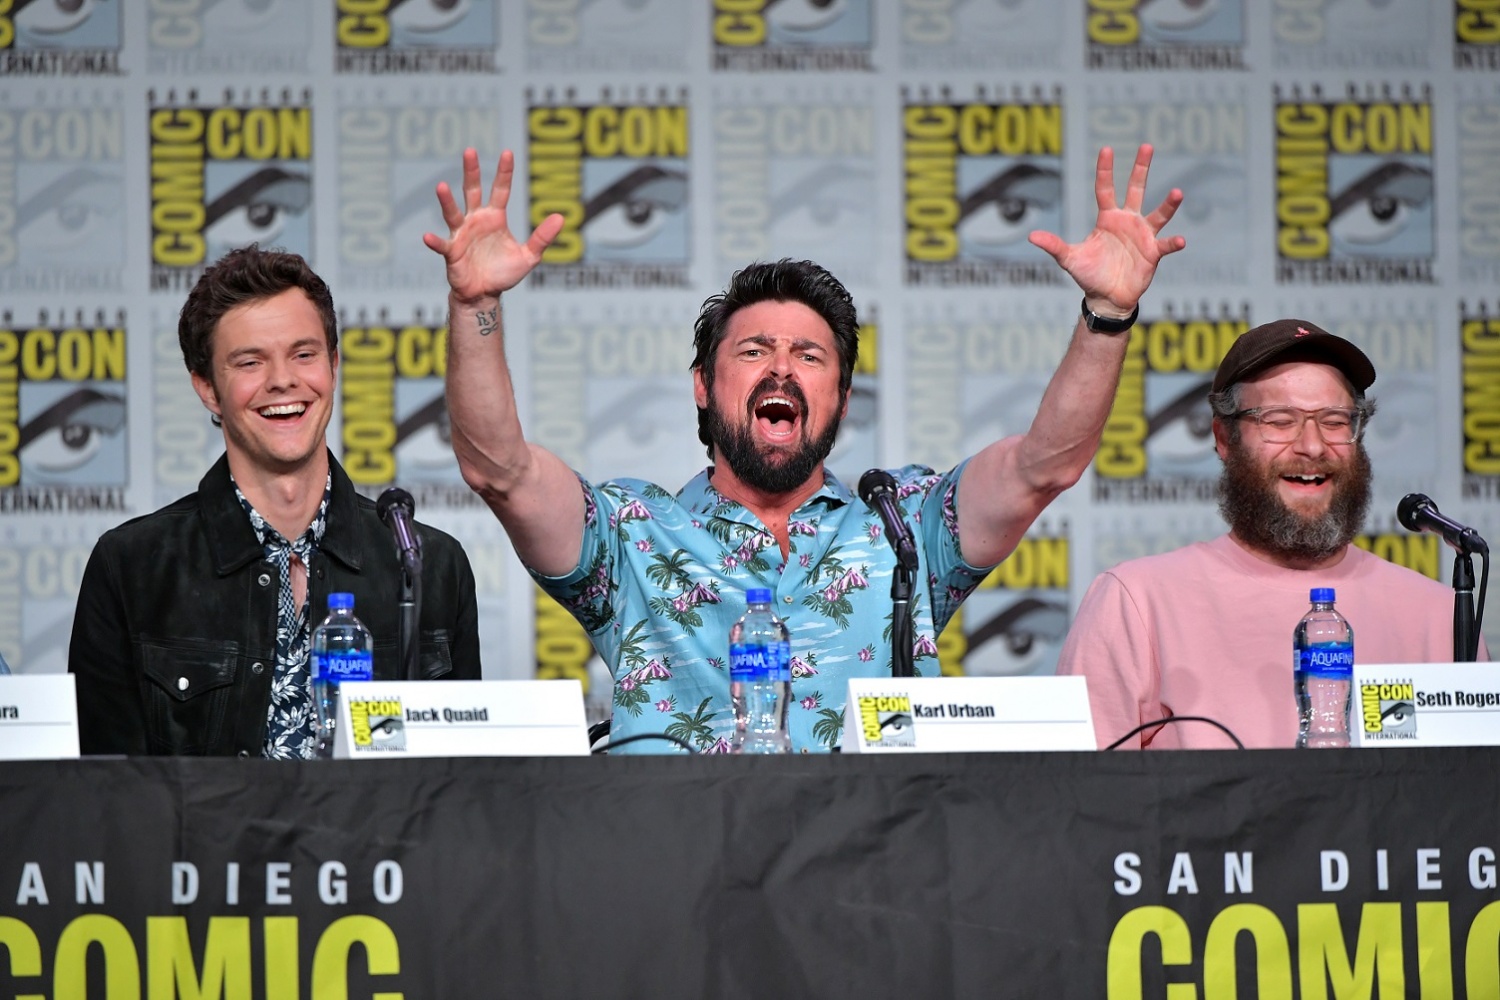 2019 Comic-Con International - "The Boys" Panel People: Jack Quaid, Karl Urban, Seth Rogen